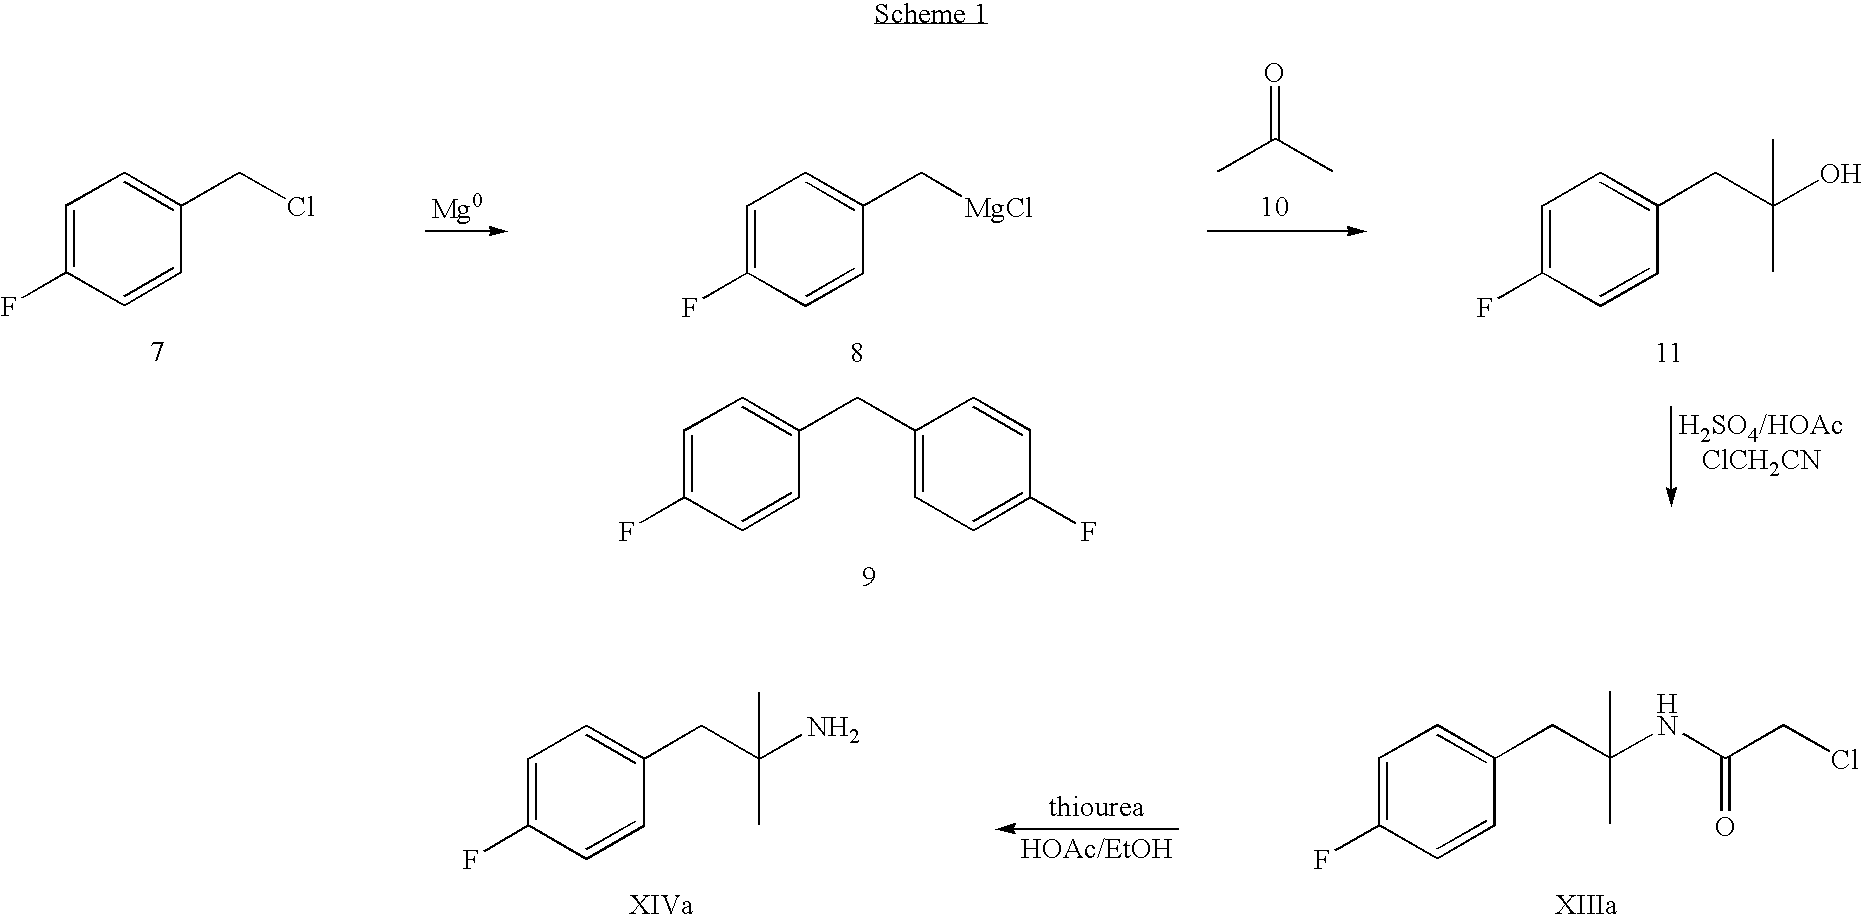 Methods for preparing glutamic acid derivatives and intermediates thereof